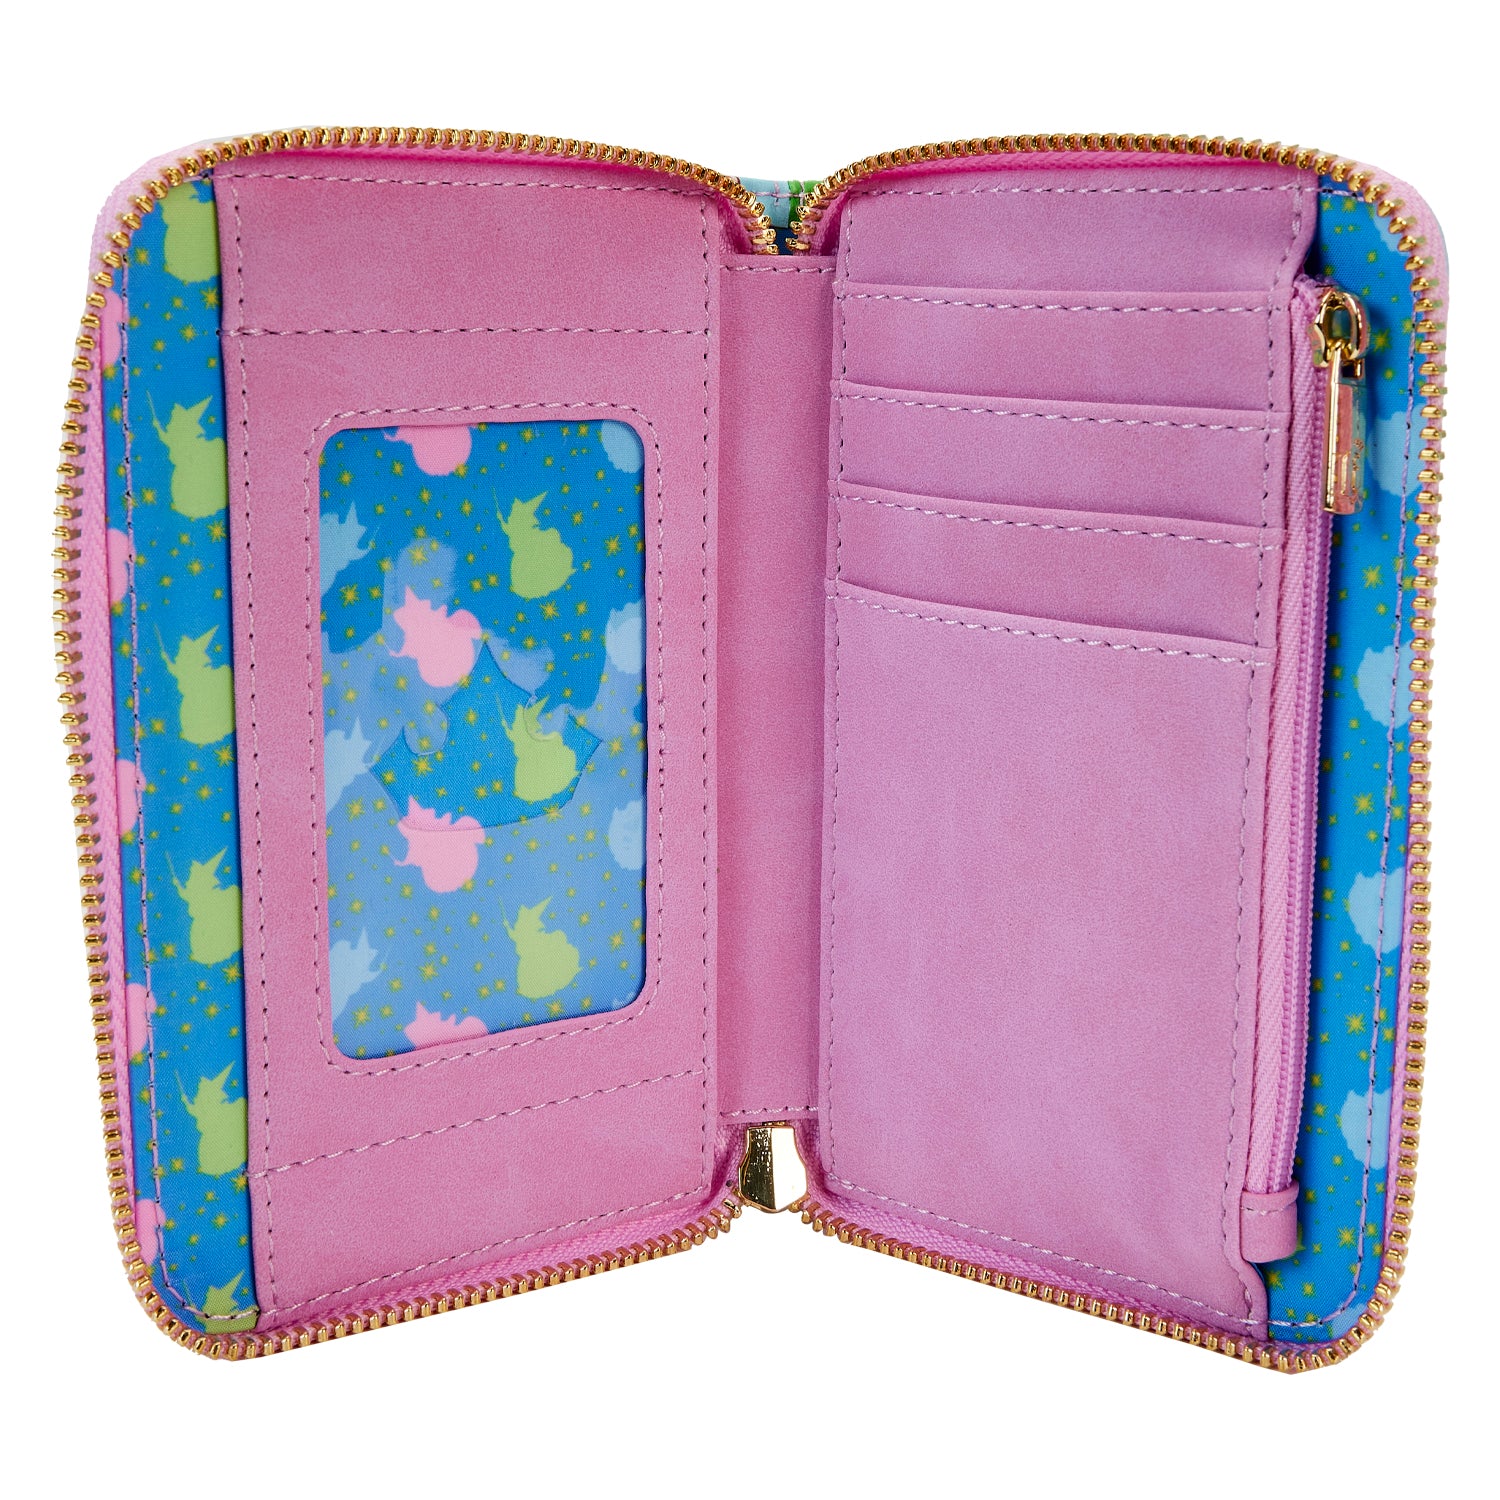 Loungefly Backpack+Wallet Sleeping Beauty Fairies Make It Pink